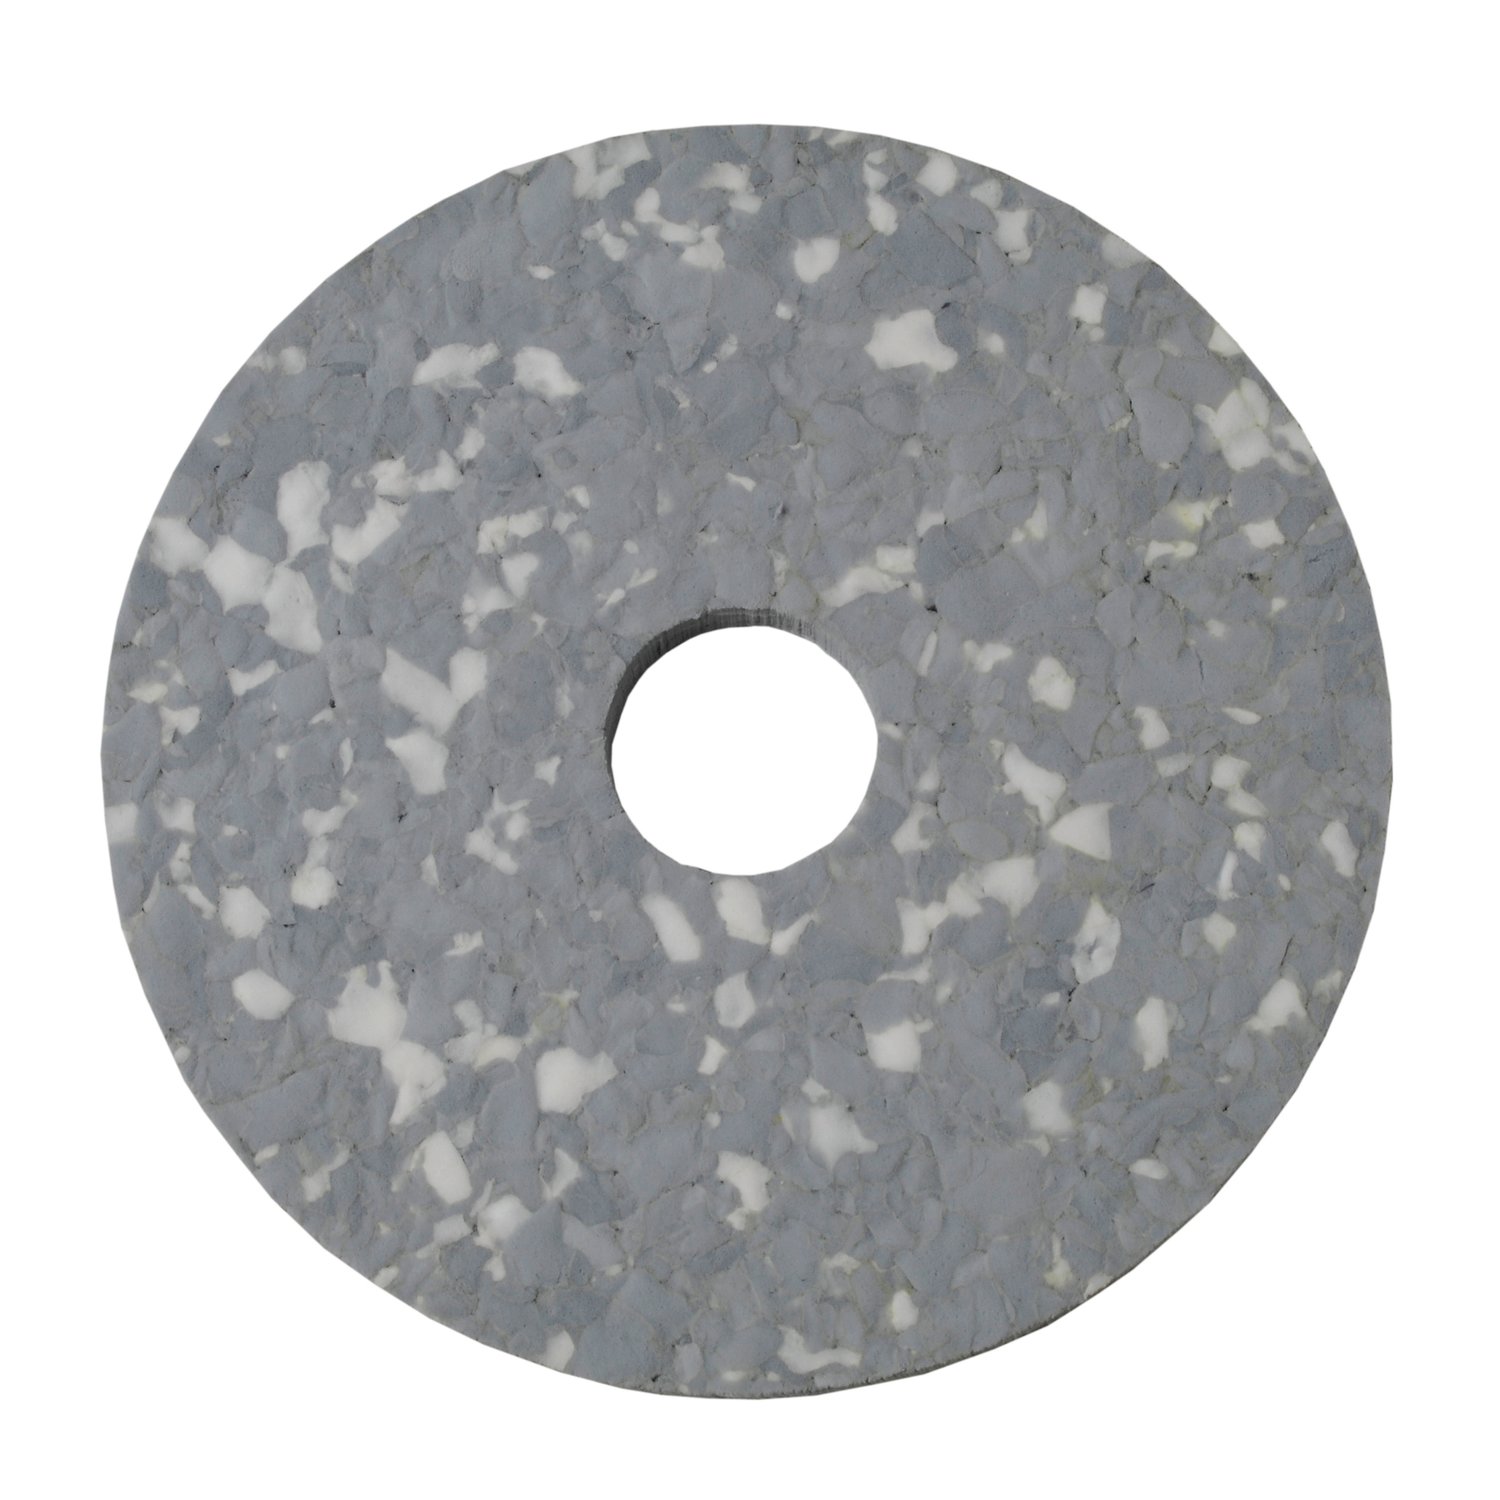 7000062985 - 3M Melamine Floor Pad, Grey/White, 505 mm, 5/Case